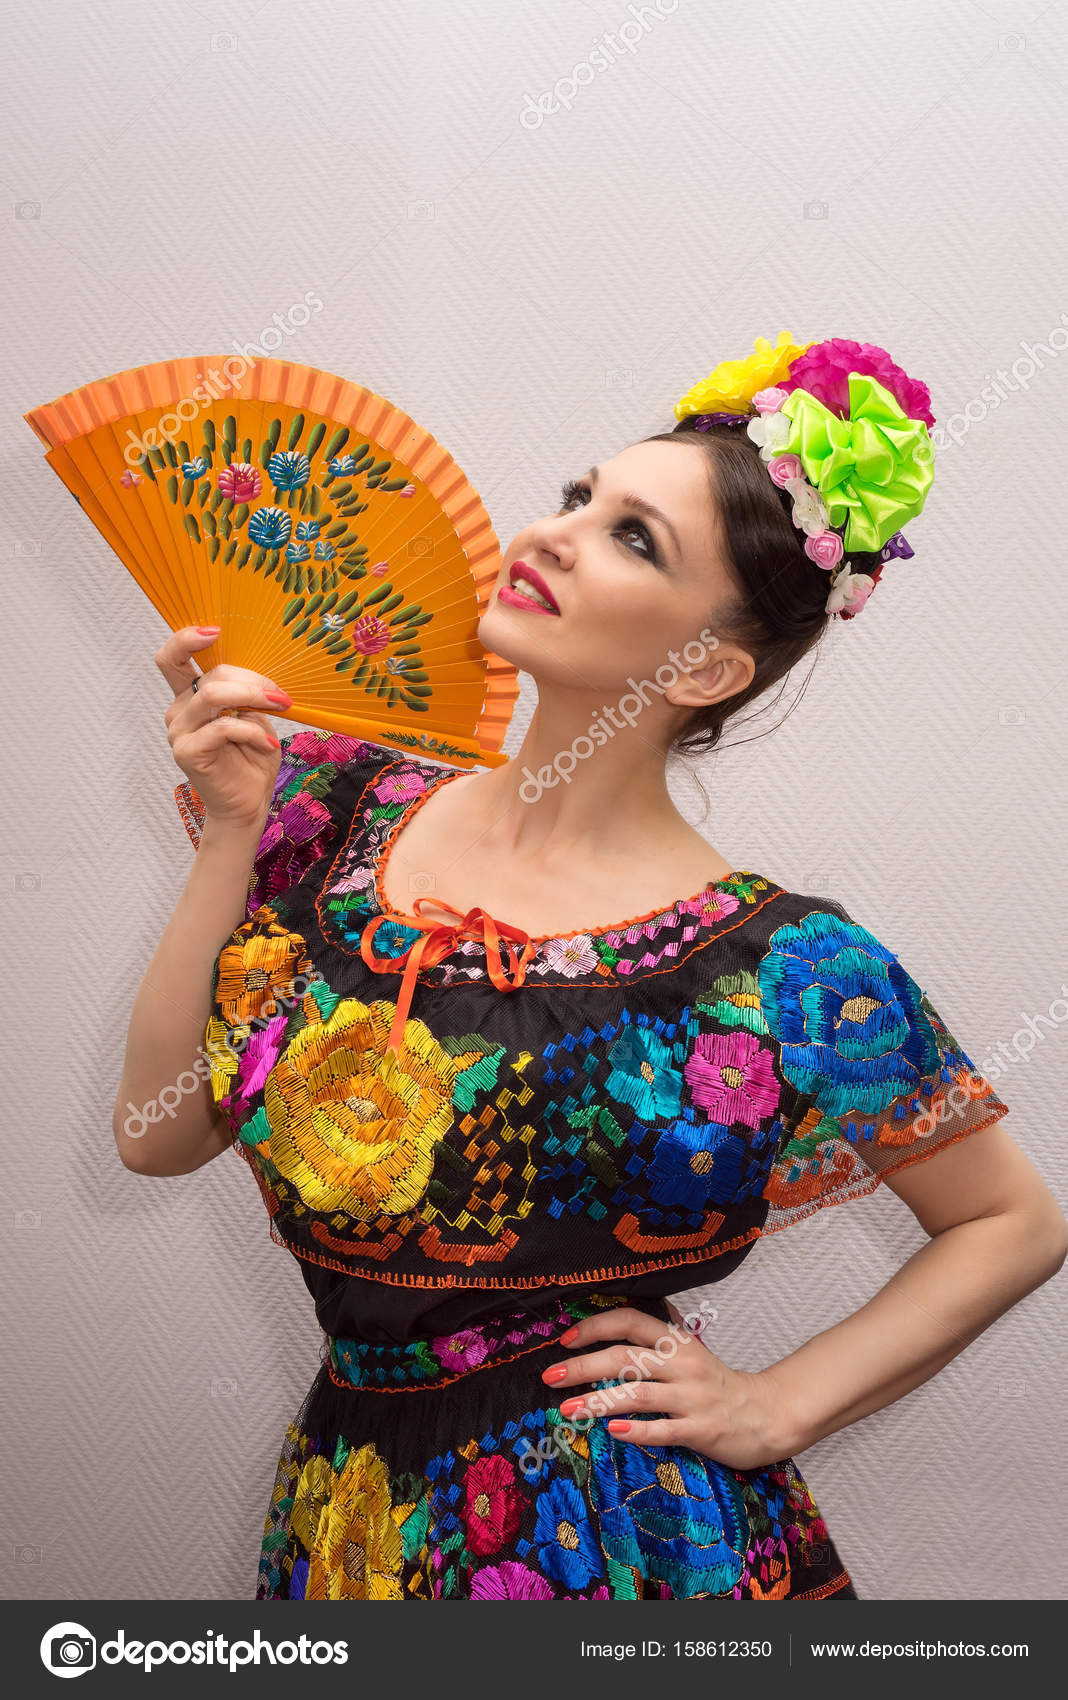 https://st3.depositphotos.com/2543399/15861/i/1600/depositphotos_158612350-stock-photo-beautiful-smiling-mexican-woman-in.jpg